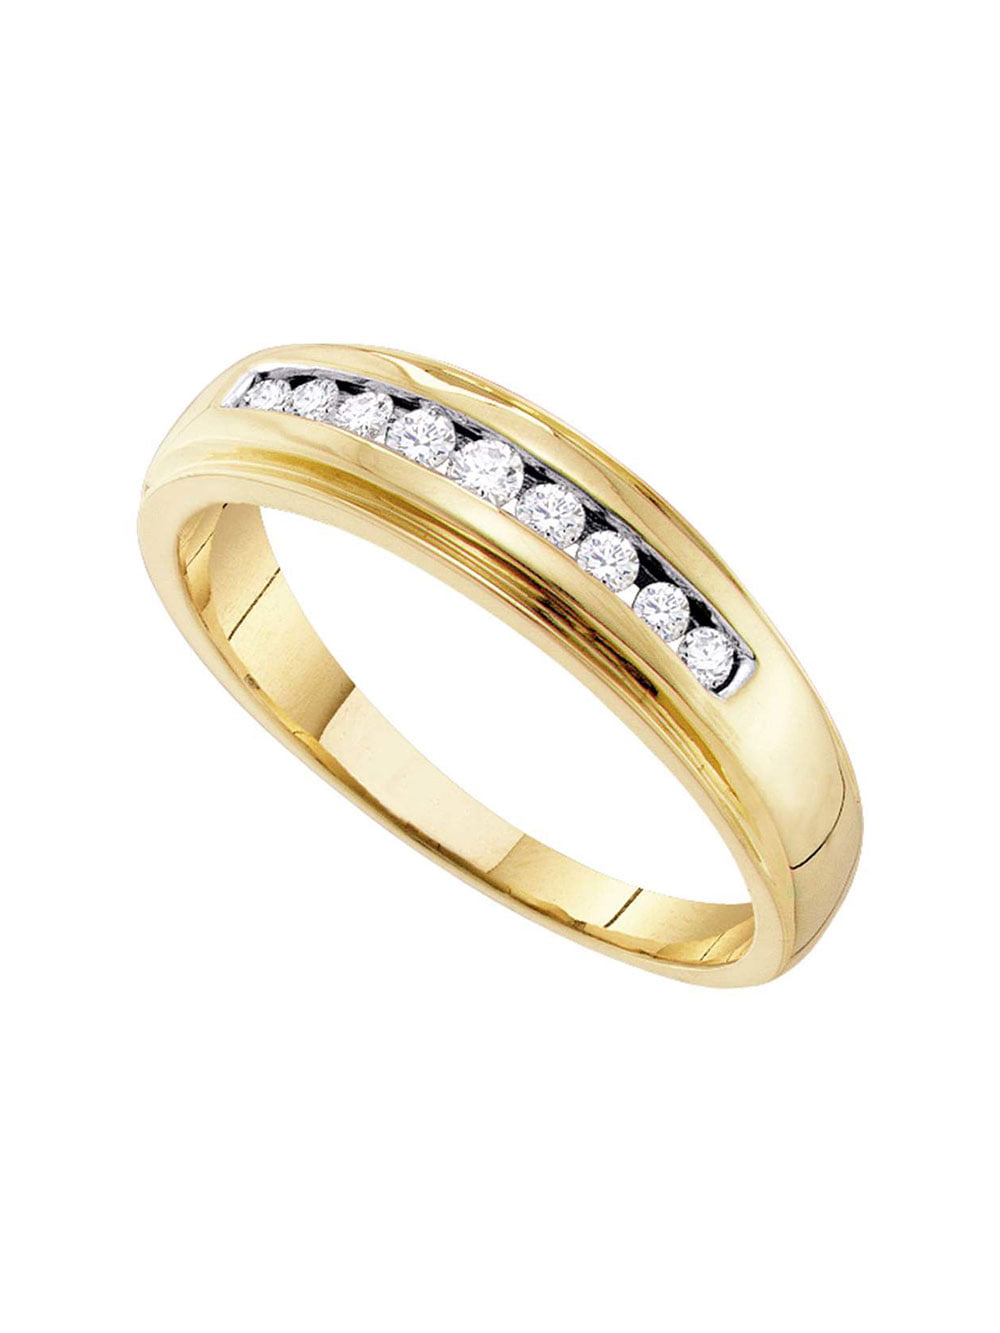 Details about   5mm Titanium Dome Brush Top Gold Strip Round Cubic Zirconia Men's Wedding ring 